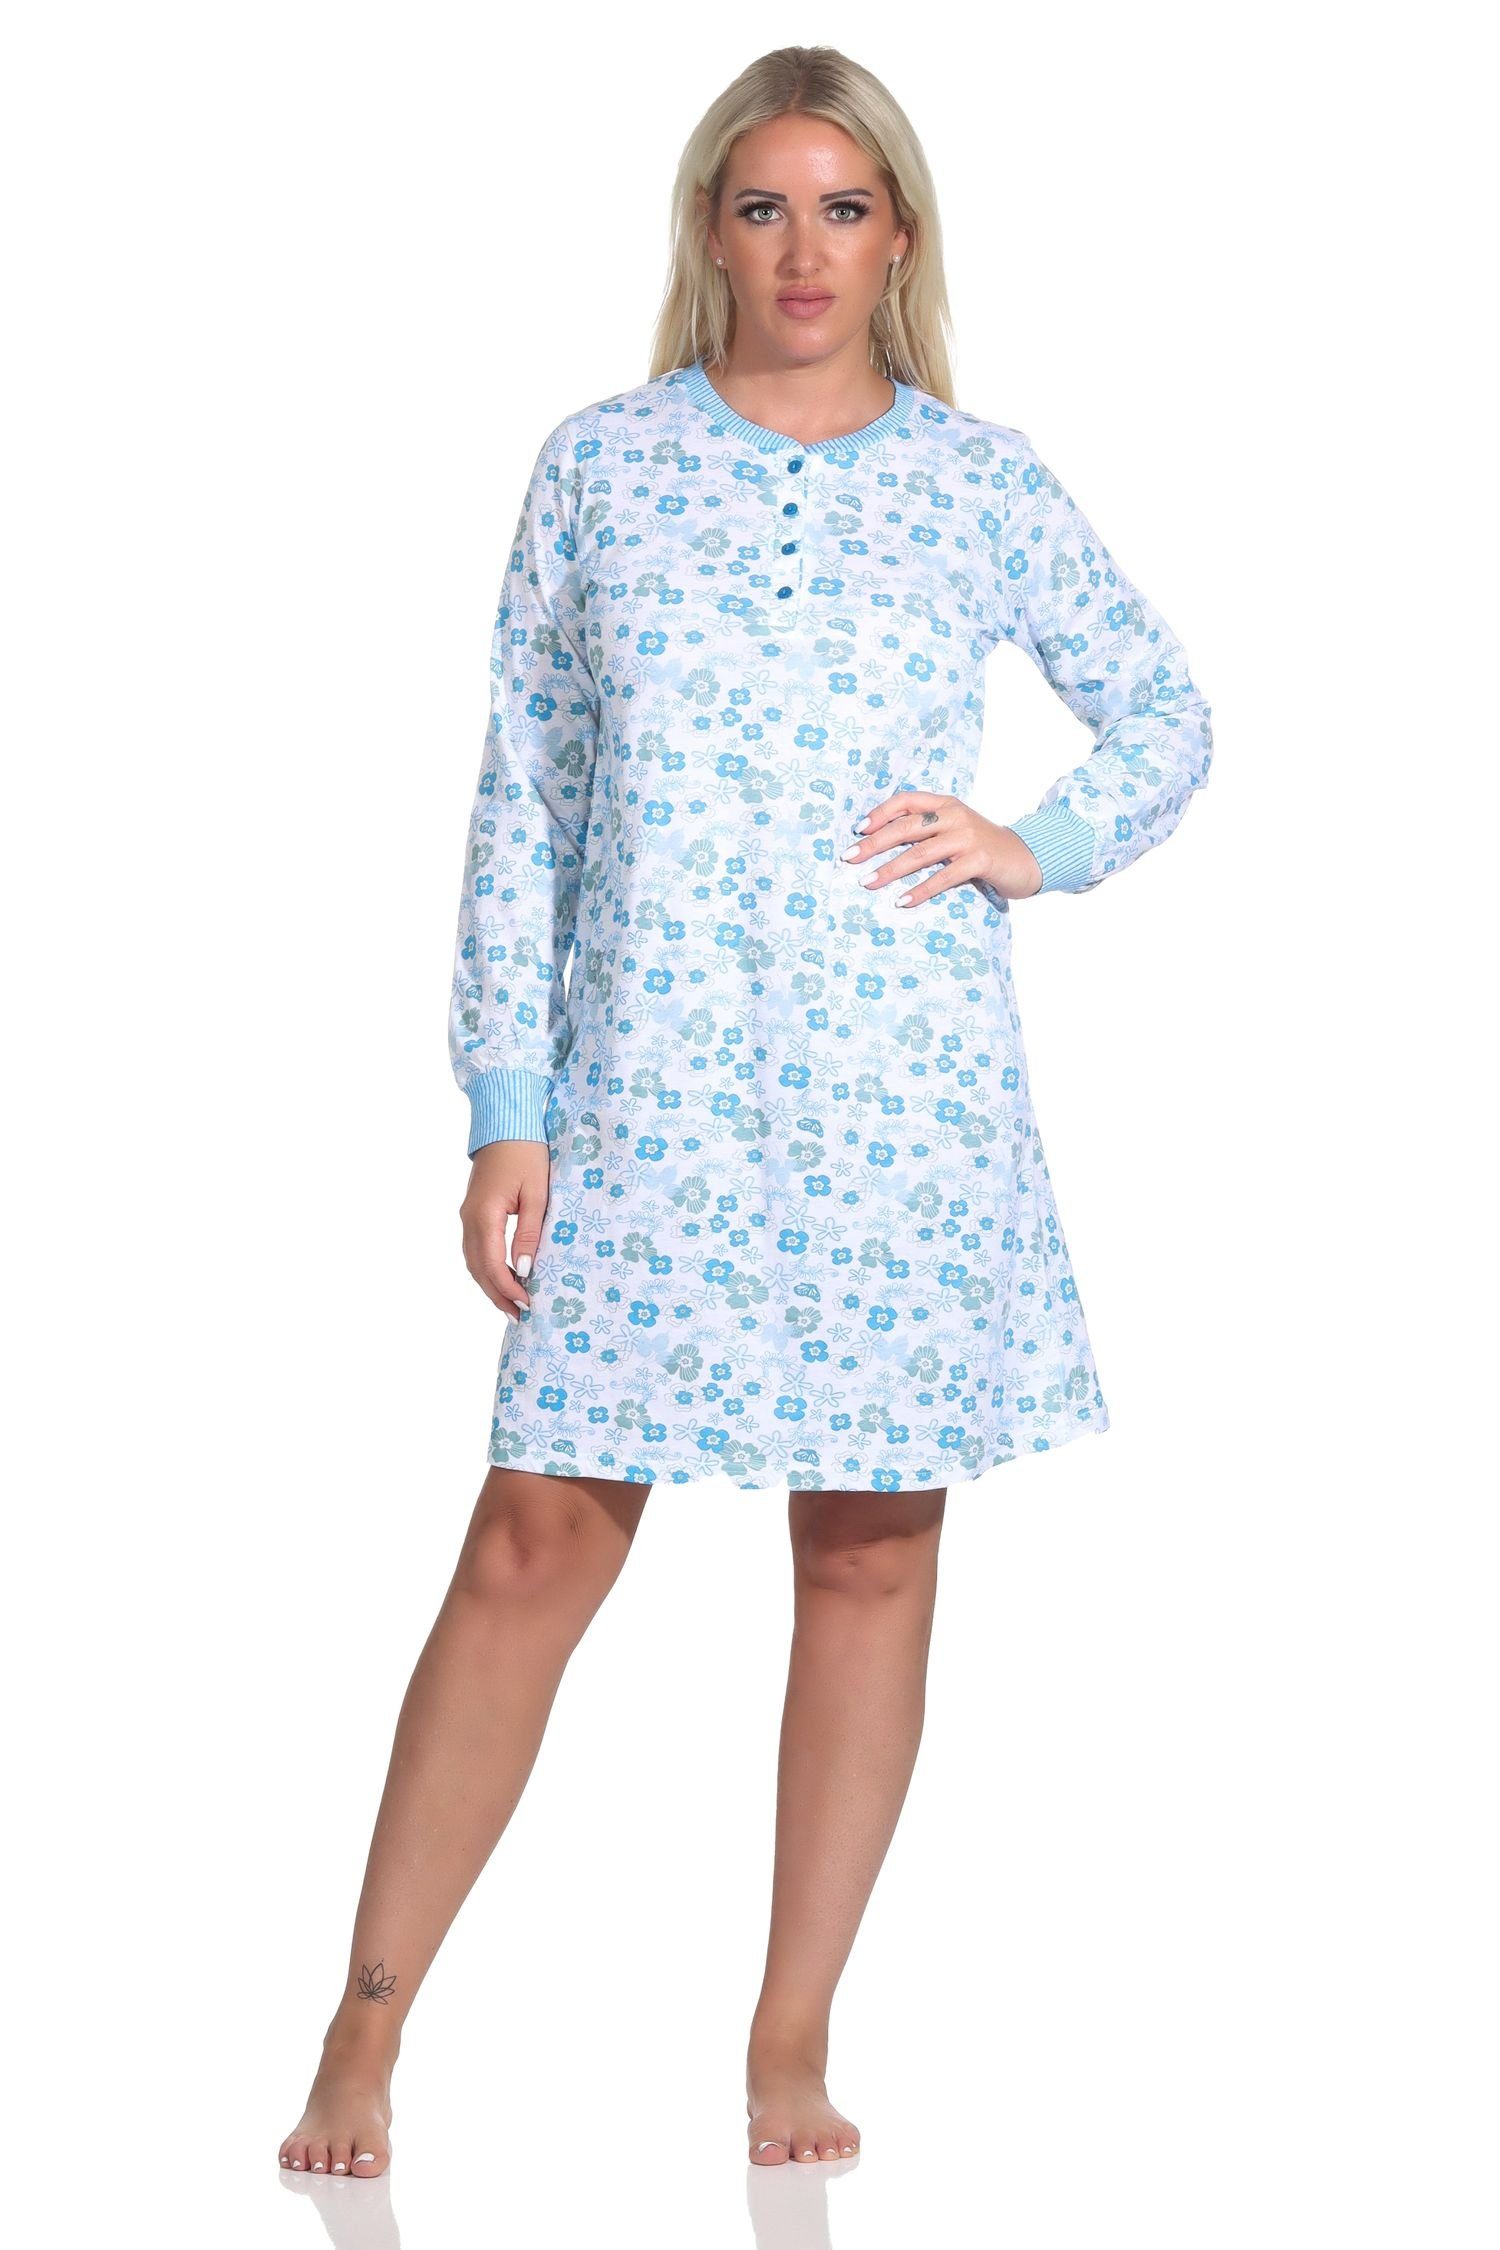 Normann Nachthemd Damen Nachthemd langarm mit Bündchen an den Ärmeln in floraler Optik blau